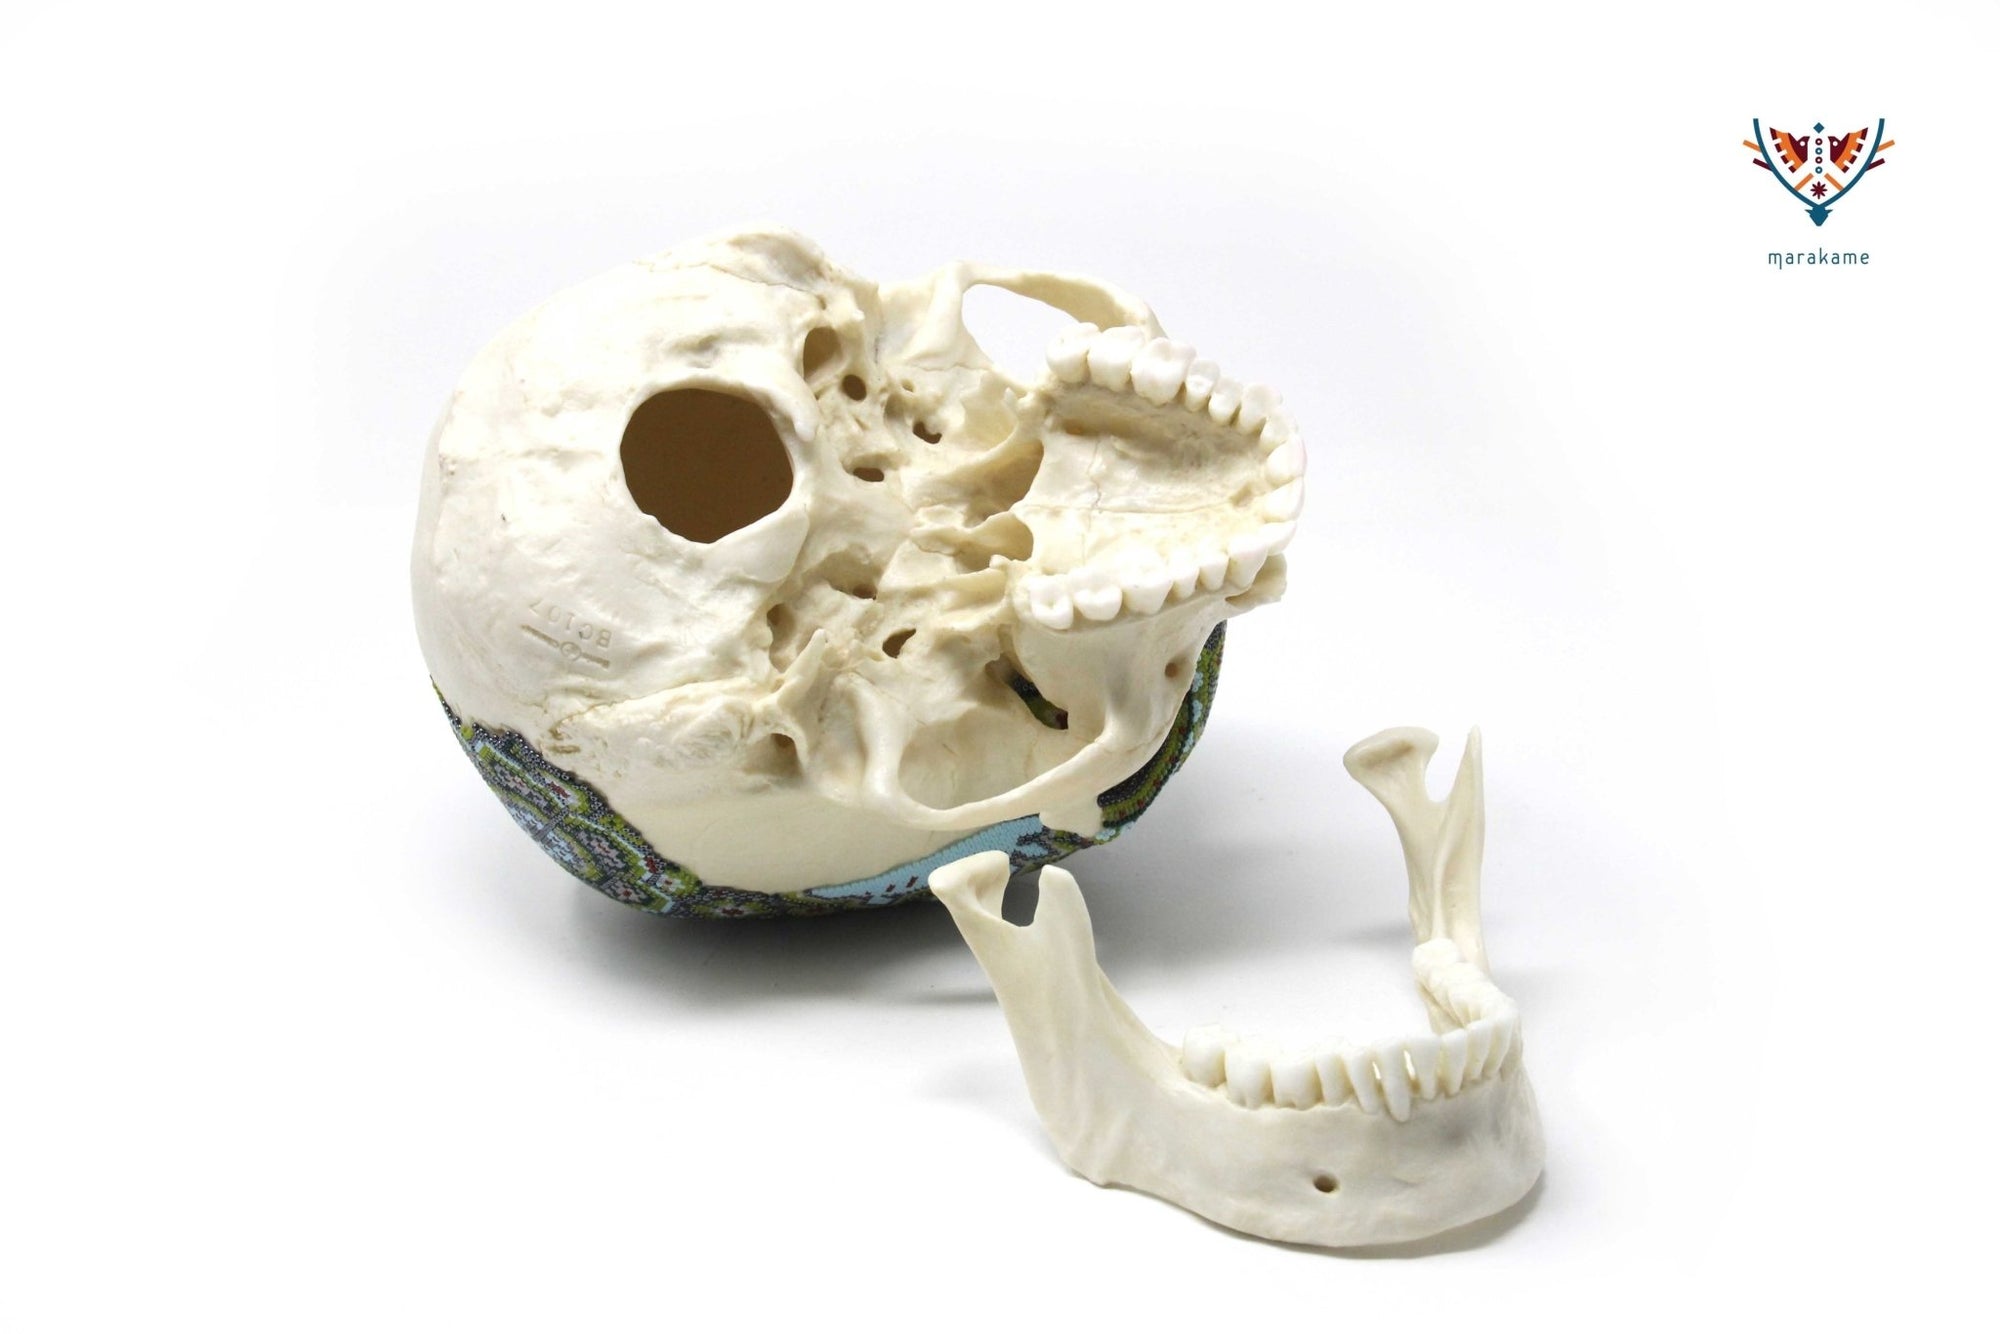 Cráneo Hiperrealista de Humano escala real "Hauxamanaka" - Arte Huichol - Marakame